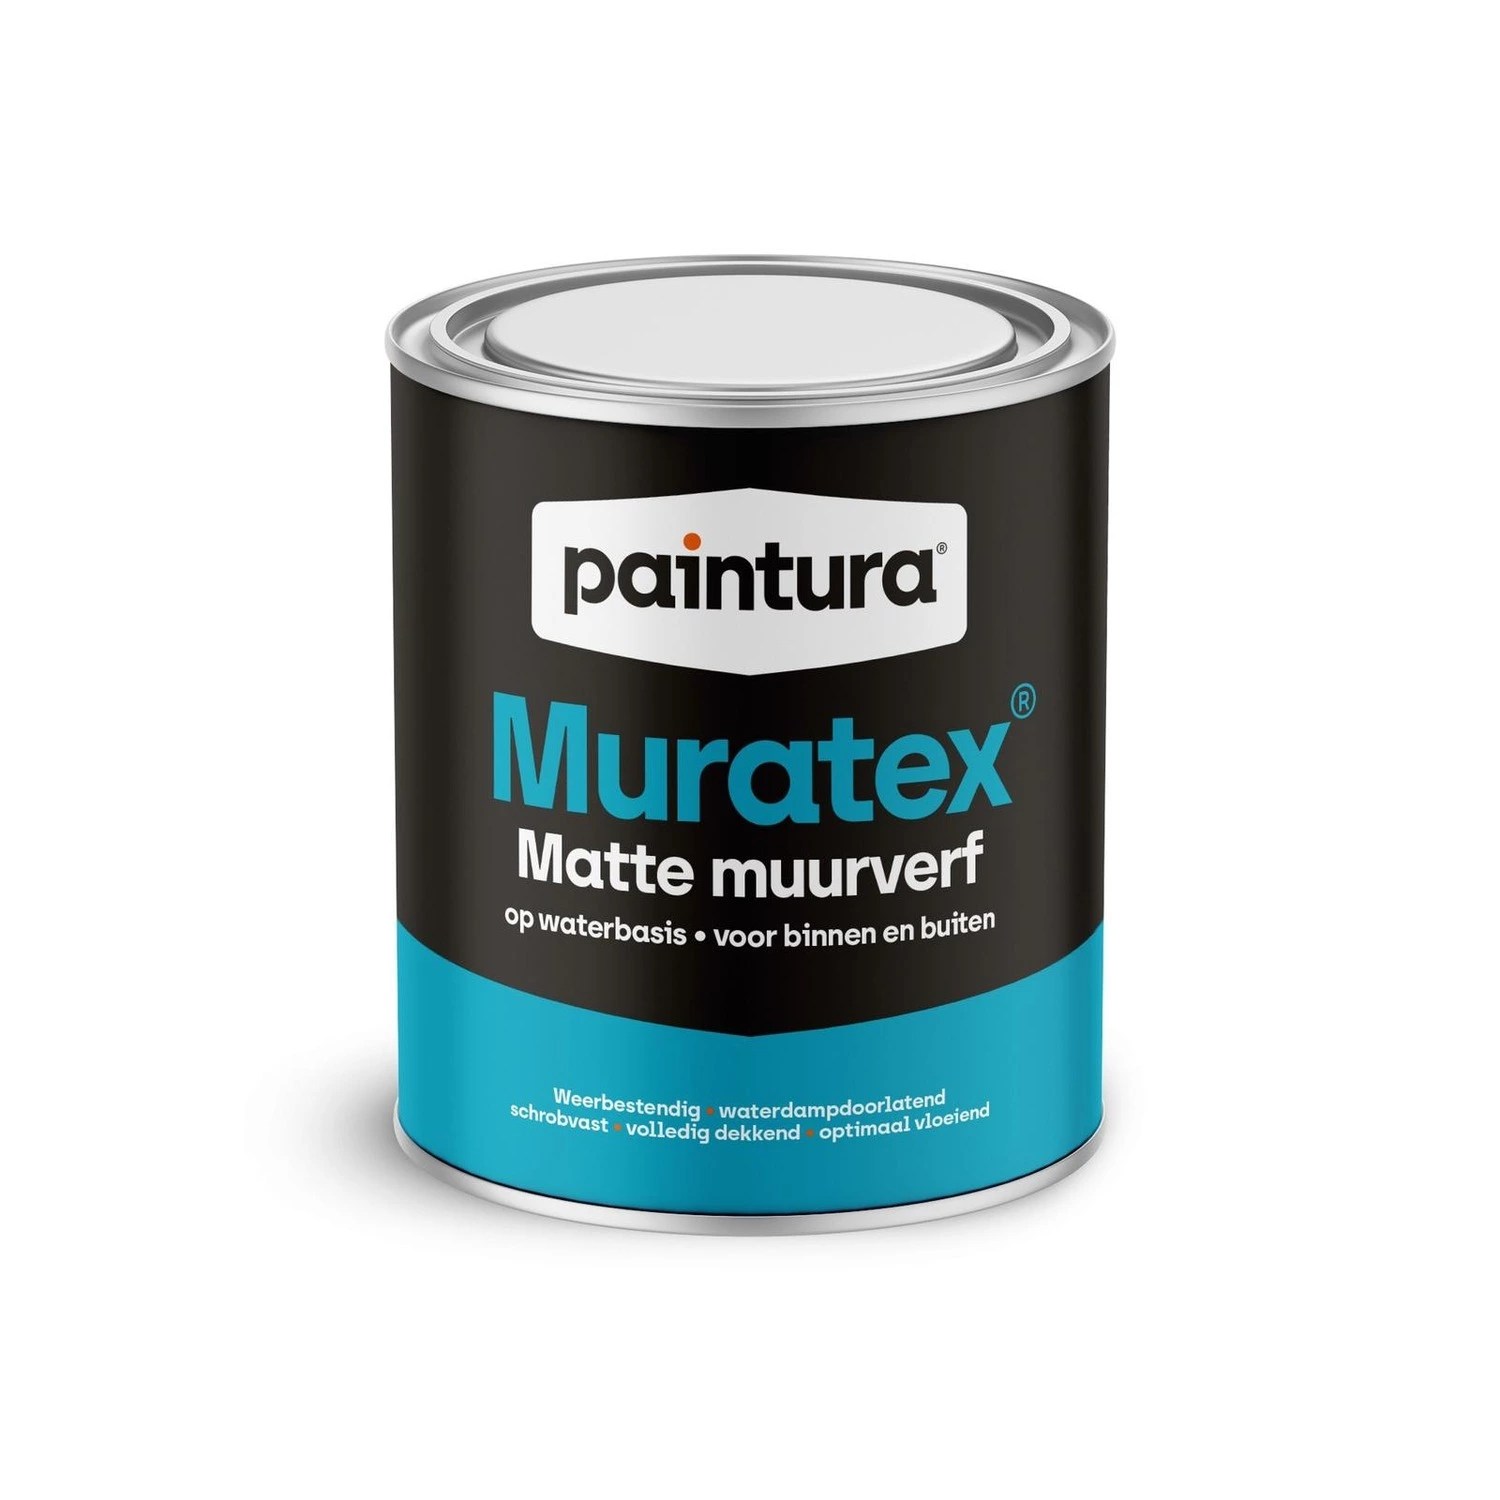 Paintura Muratex matte muurverf - op kleur gemengd - 1L-image